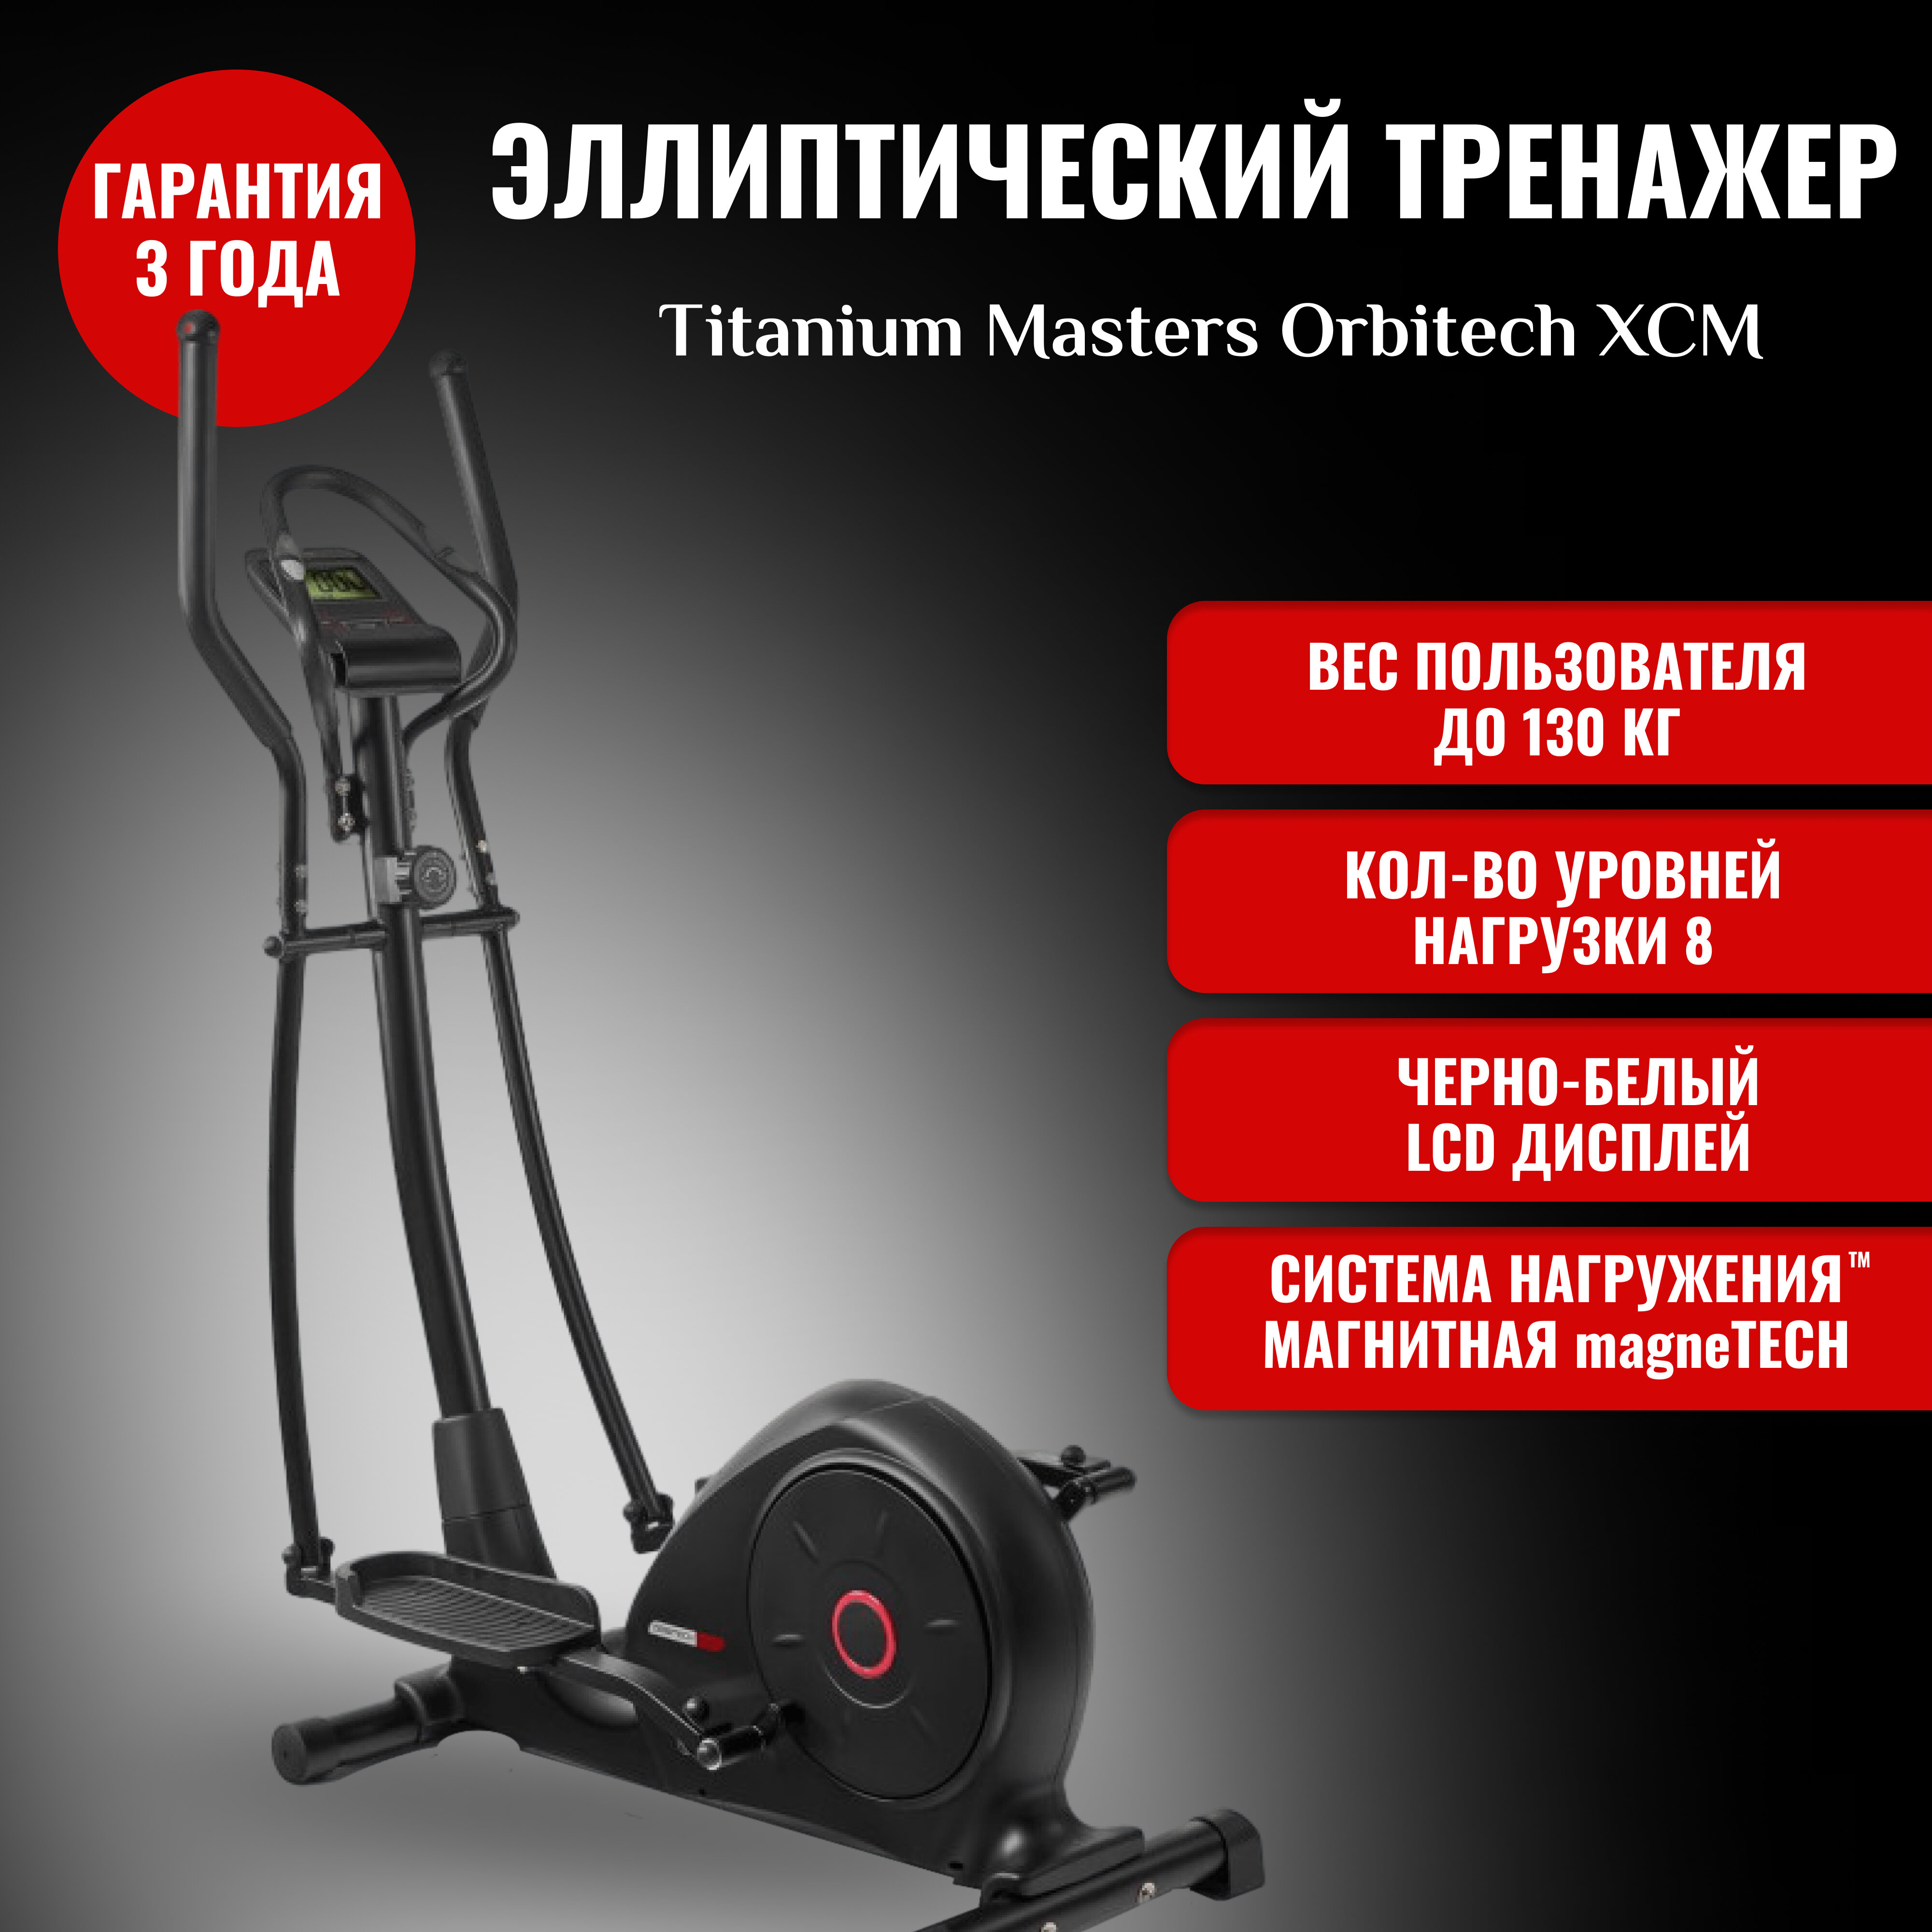 Эллиптический тренажер Titanium Masters Orbitech XCM для дома